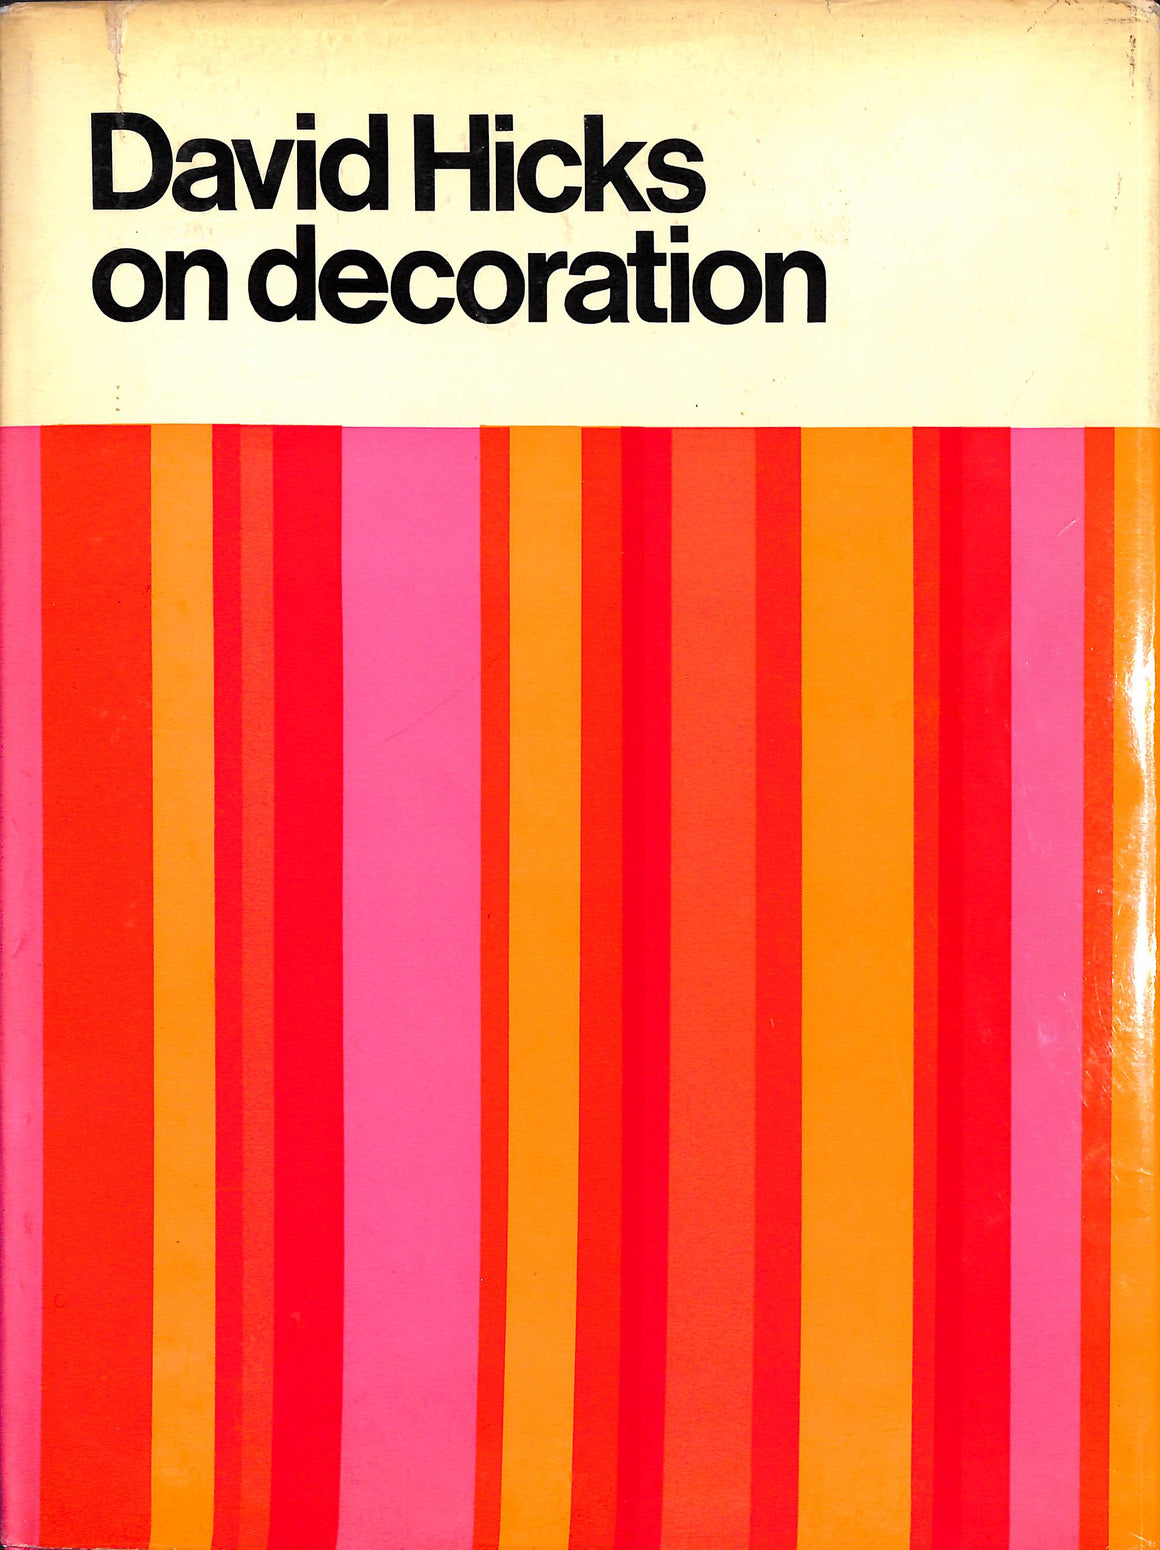 "David Hicks On Decoration" 1966